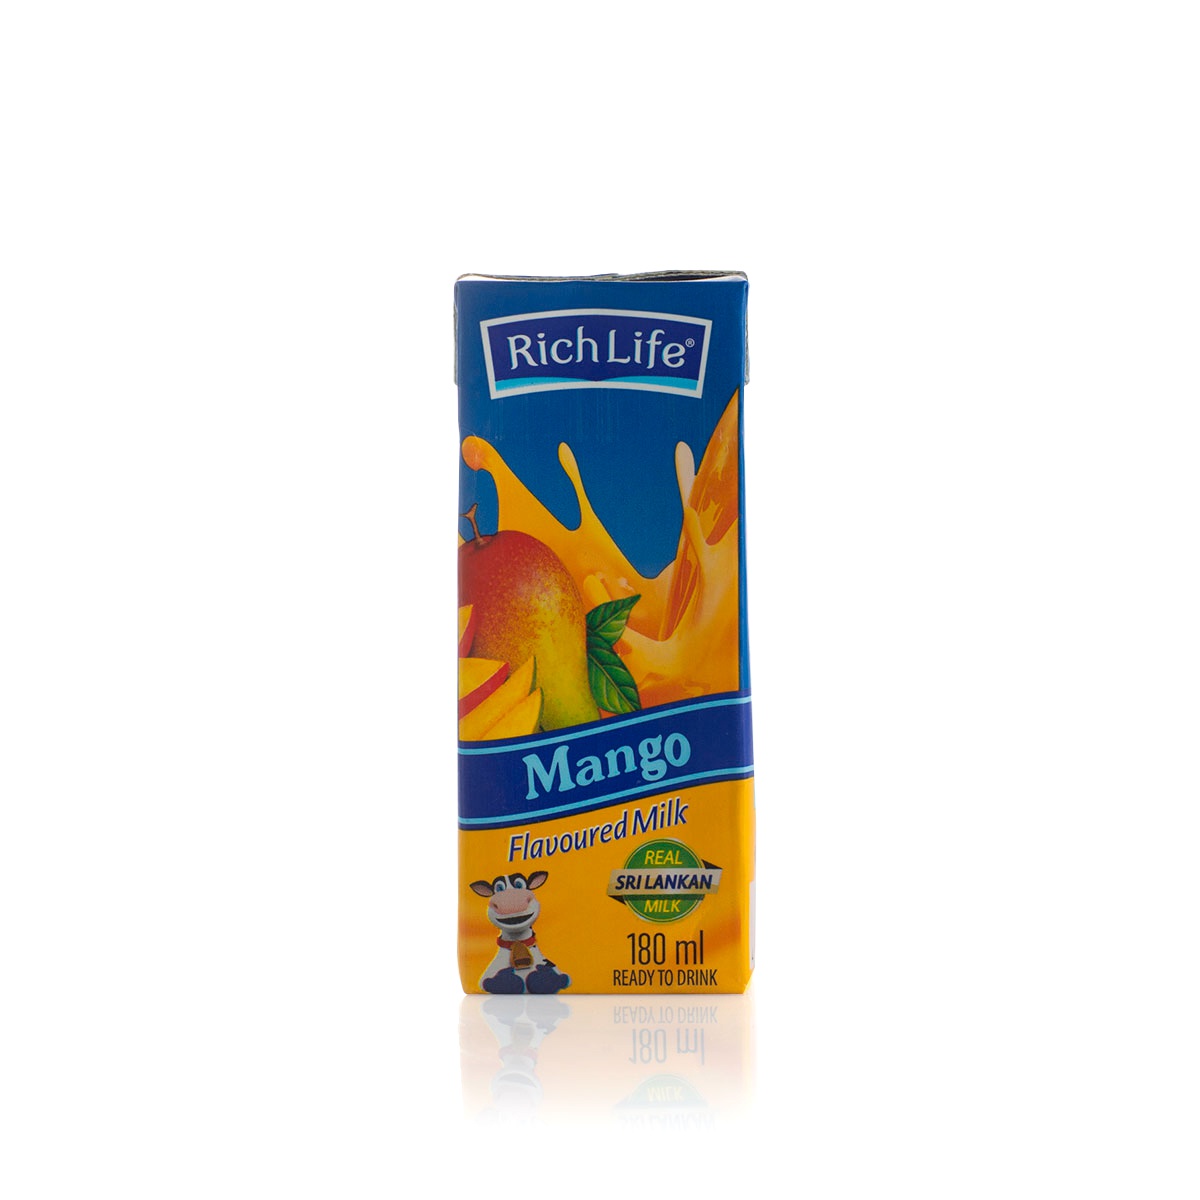 Richlife Mango Flavoured Milk Tetra Pack 180Ml - RICHLIFE - Rtd Single Consumption - in Sri Lanka